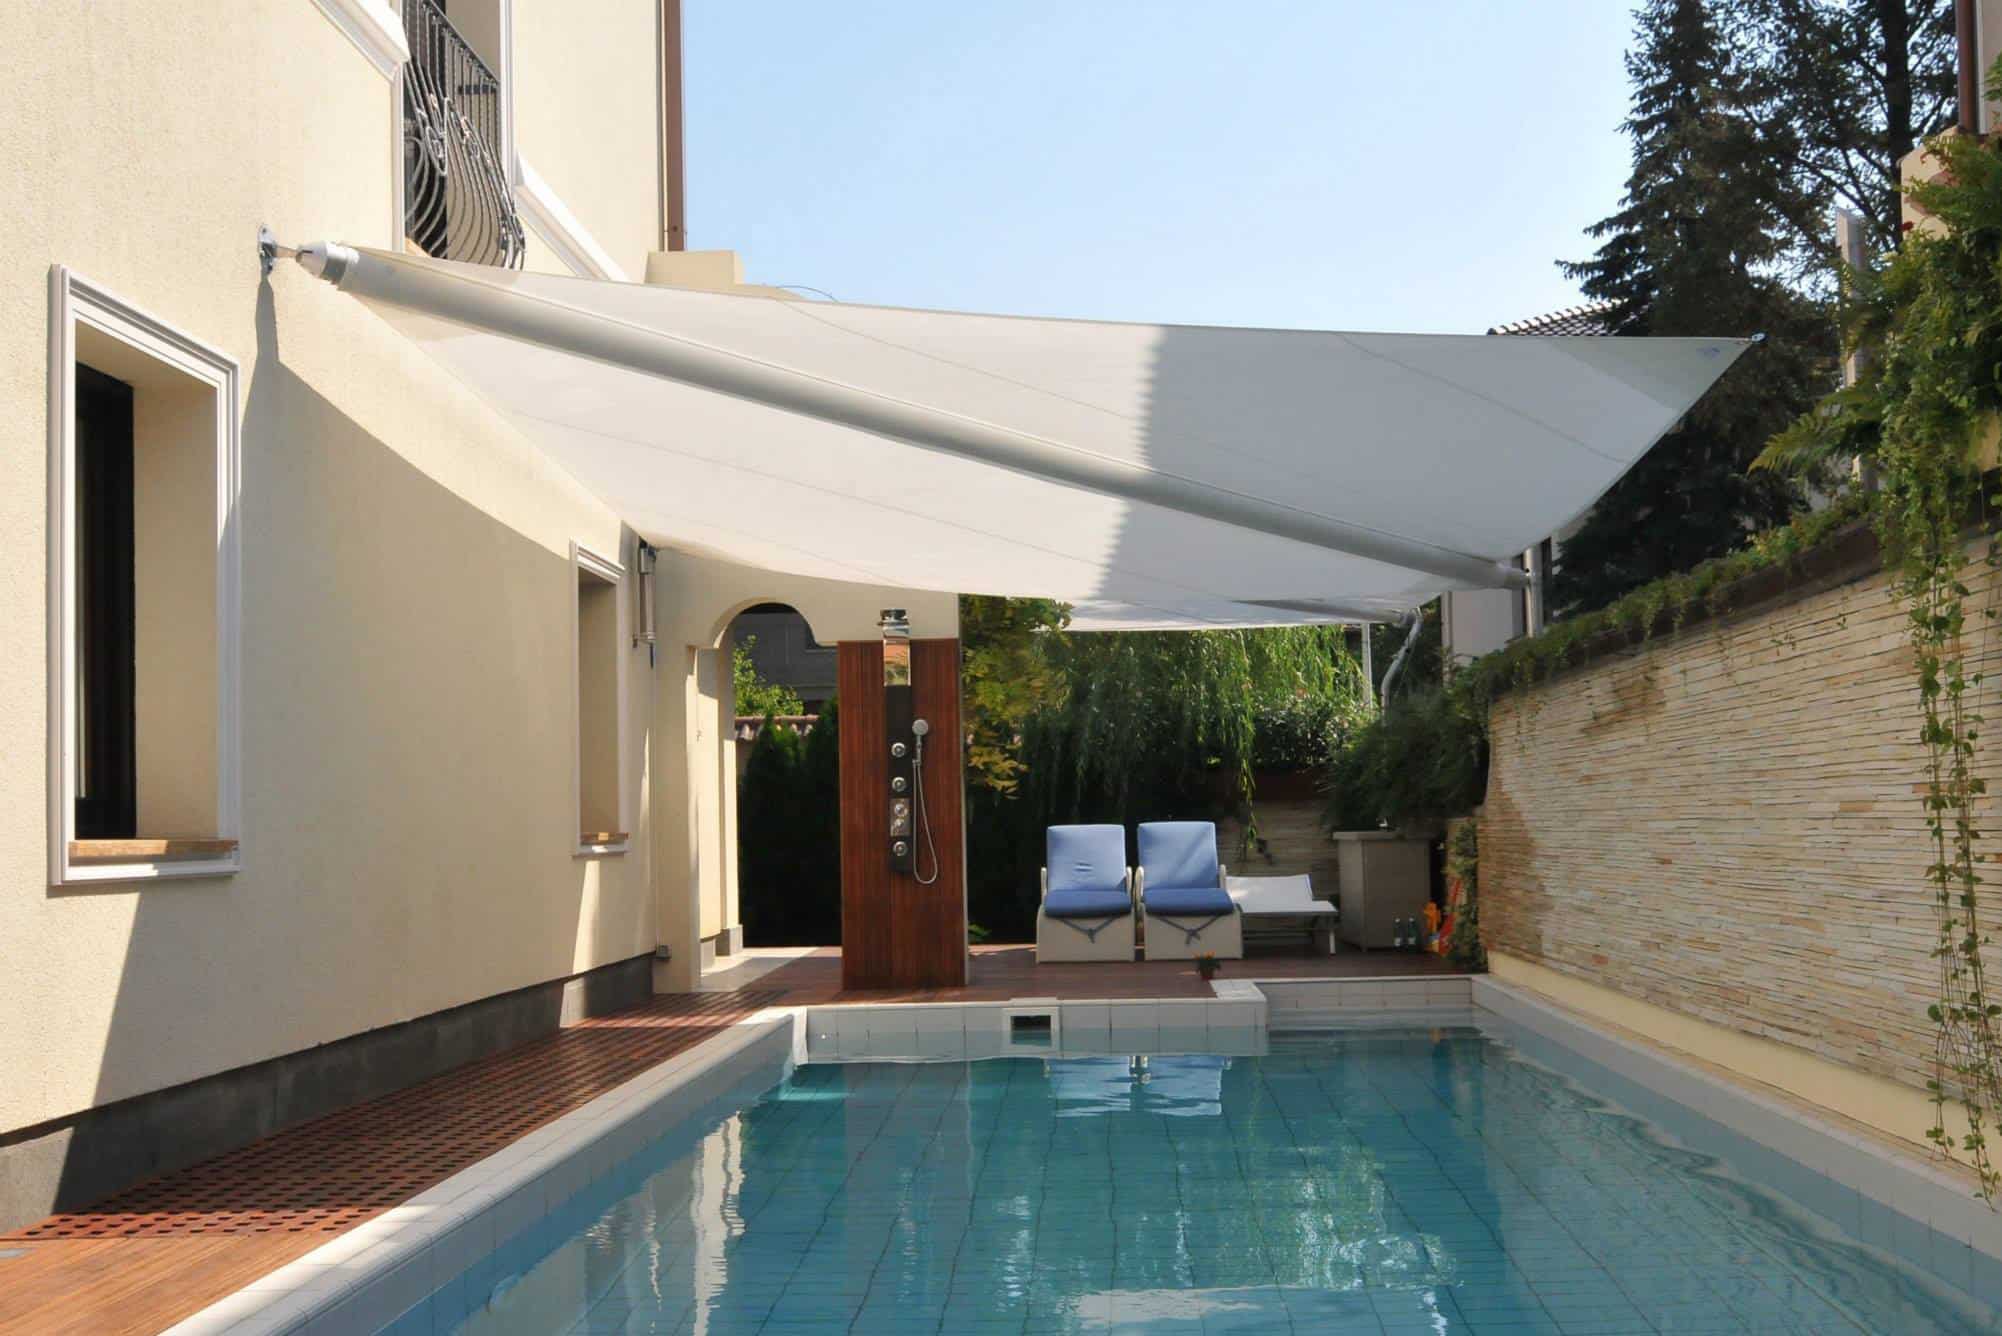 sisteme retractabile tip vela, umbrele tip vela pentru terasa, piscina, gradina made in Italy